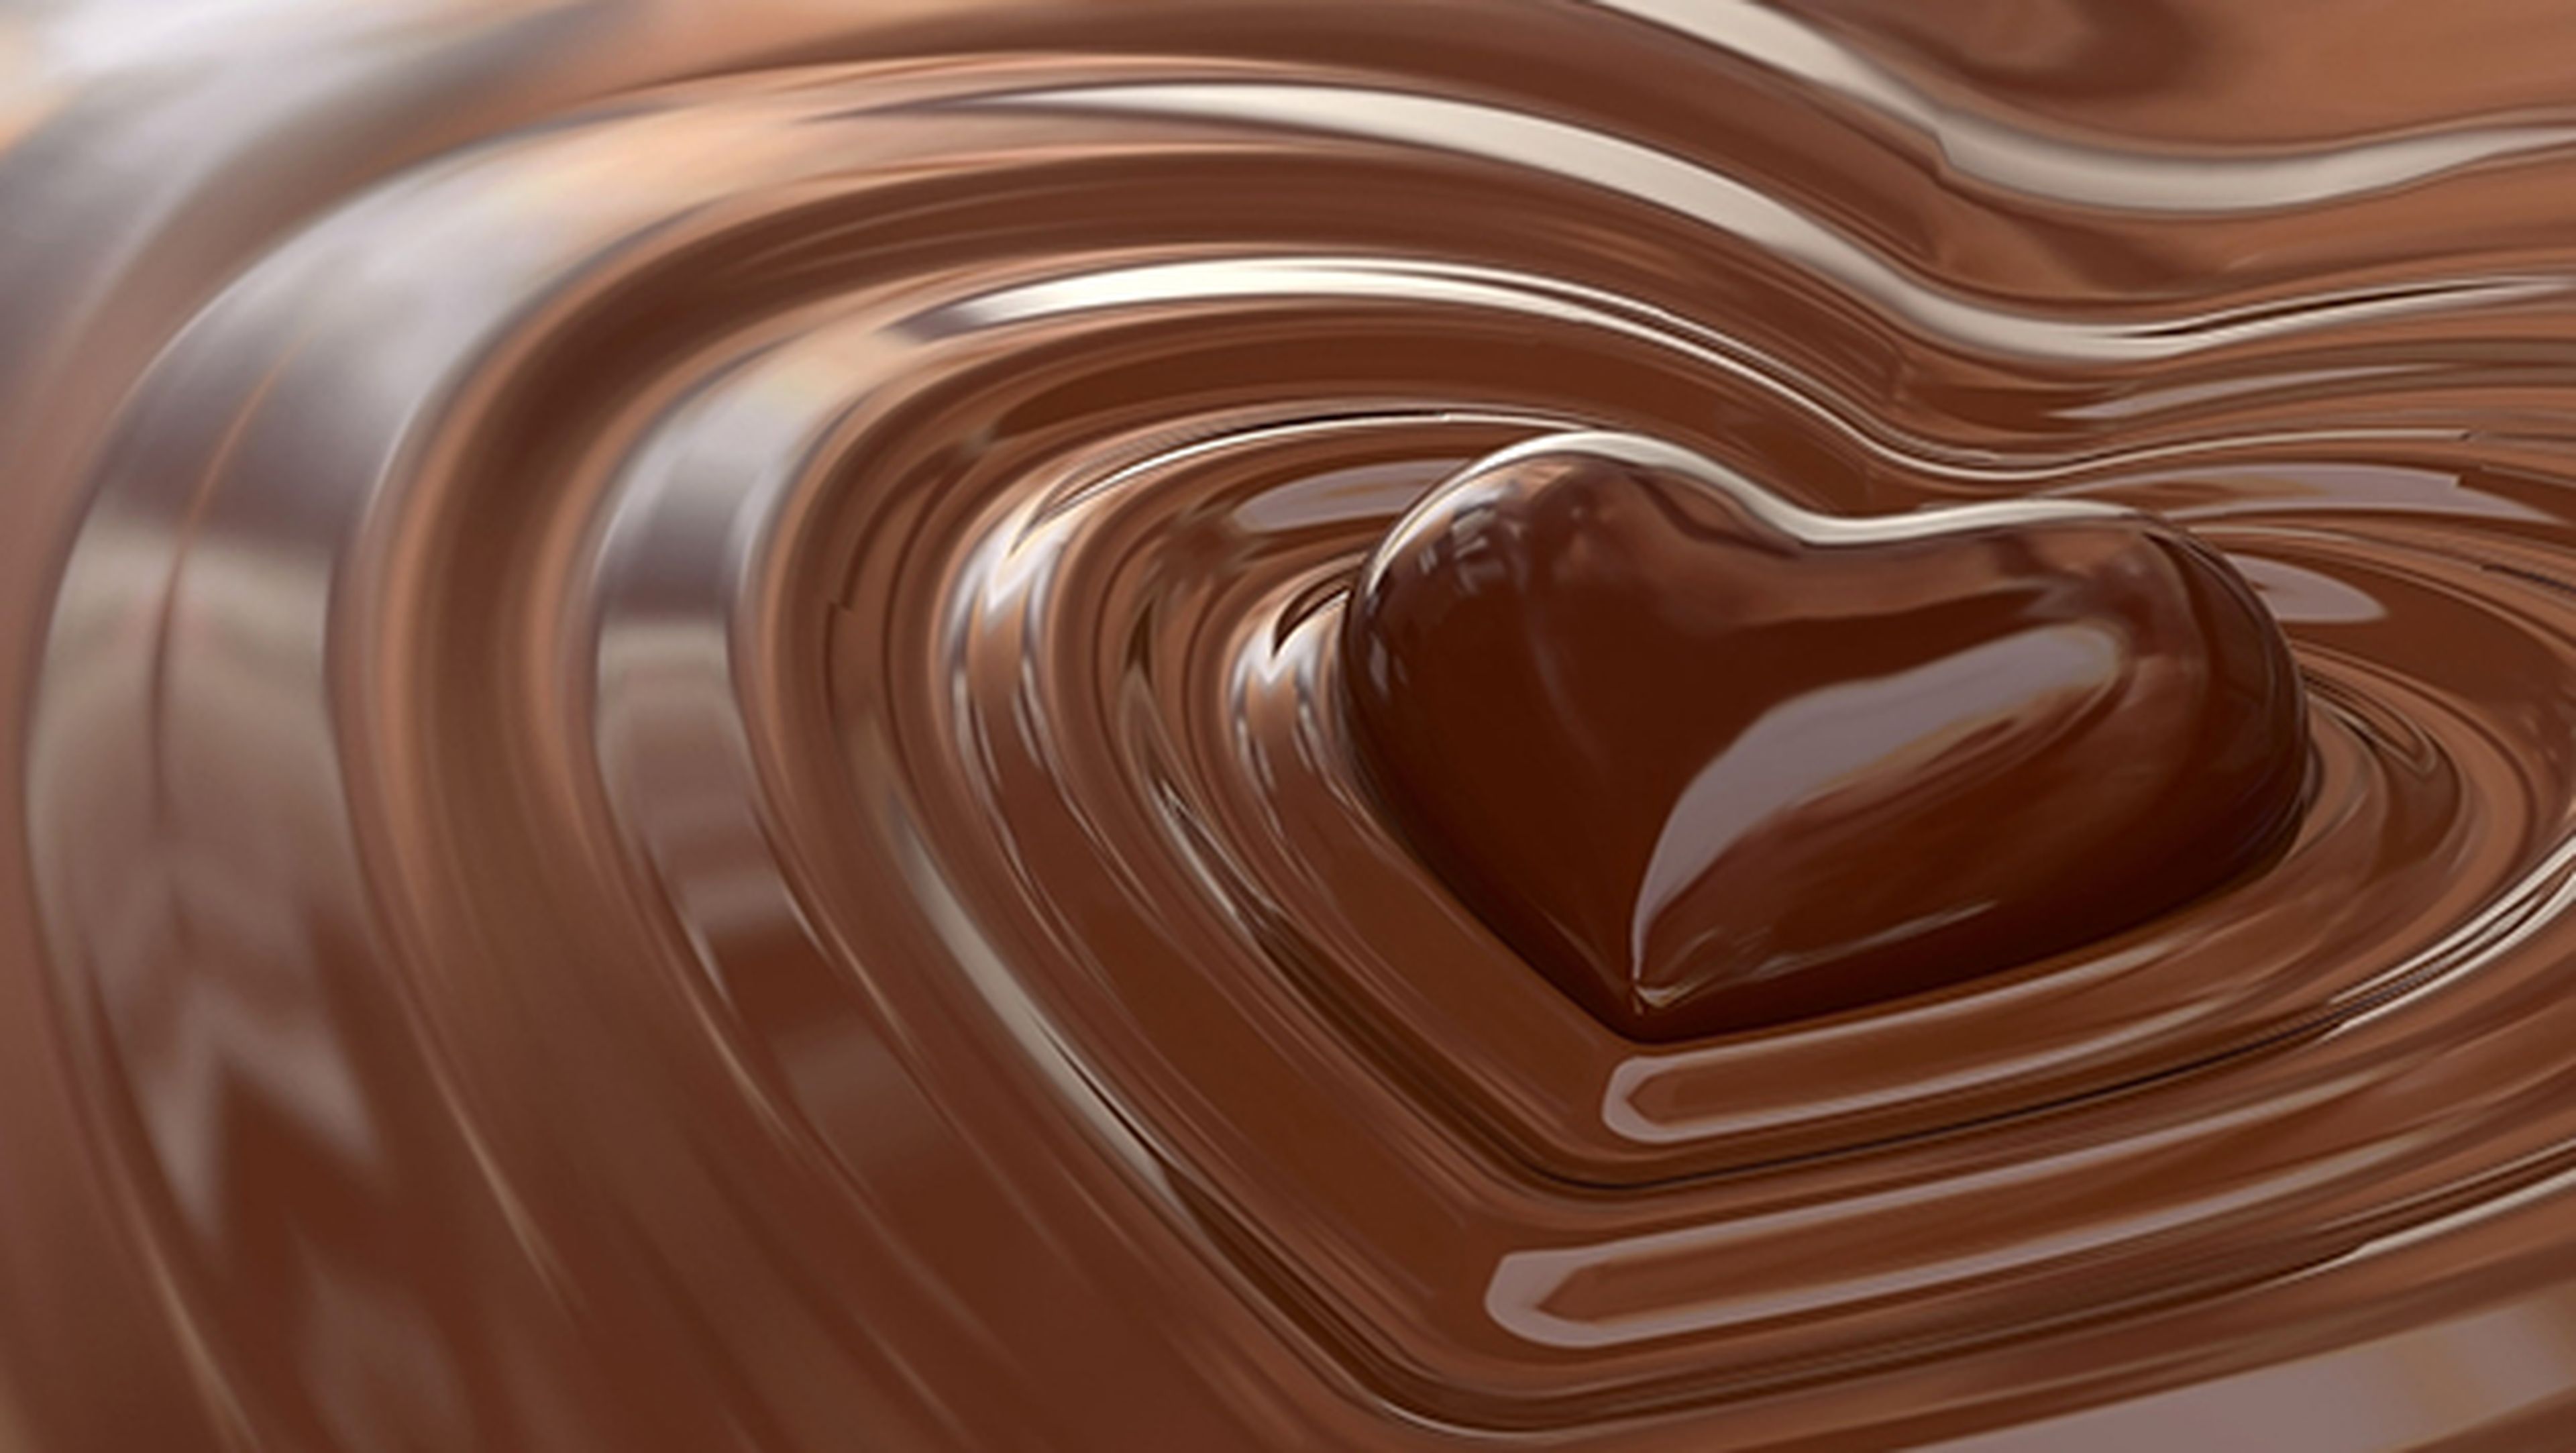 Chocolate sano